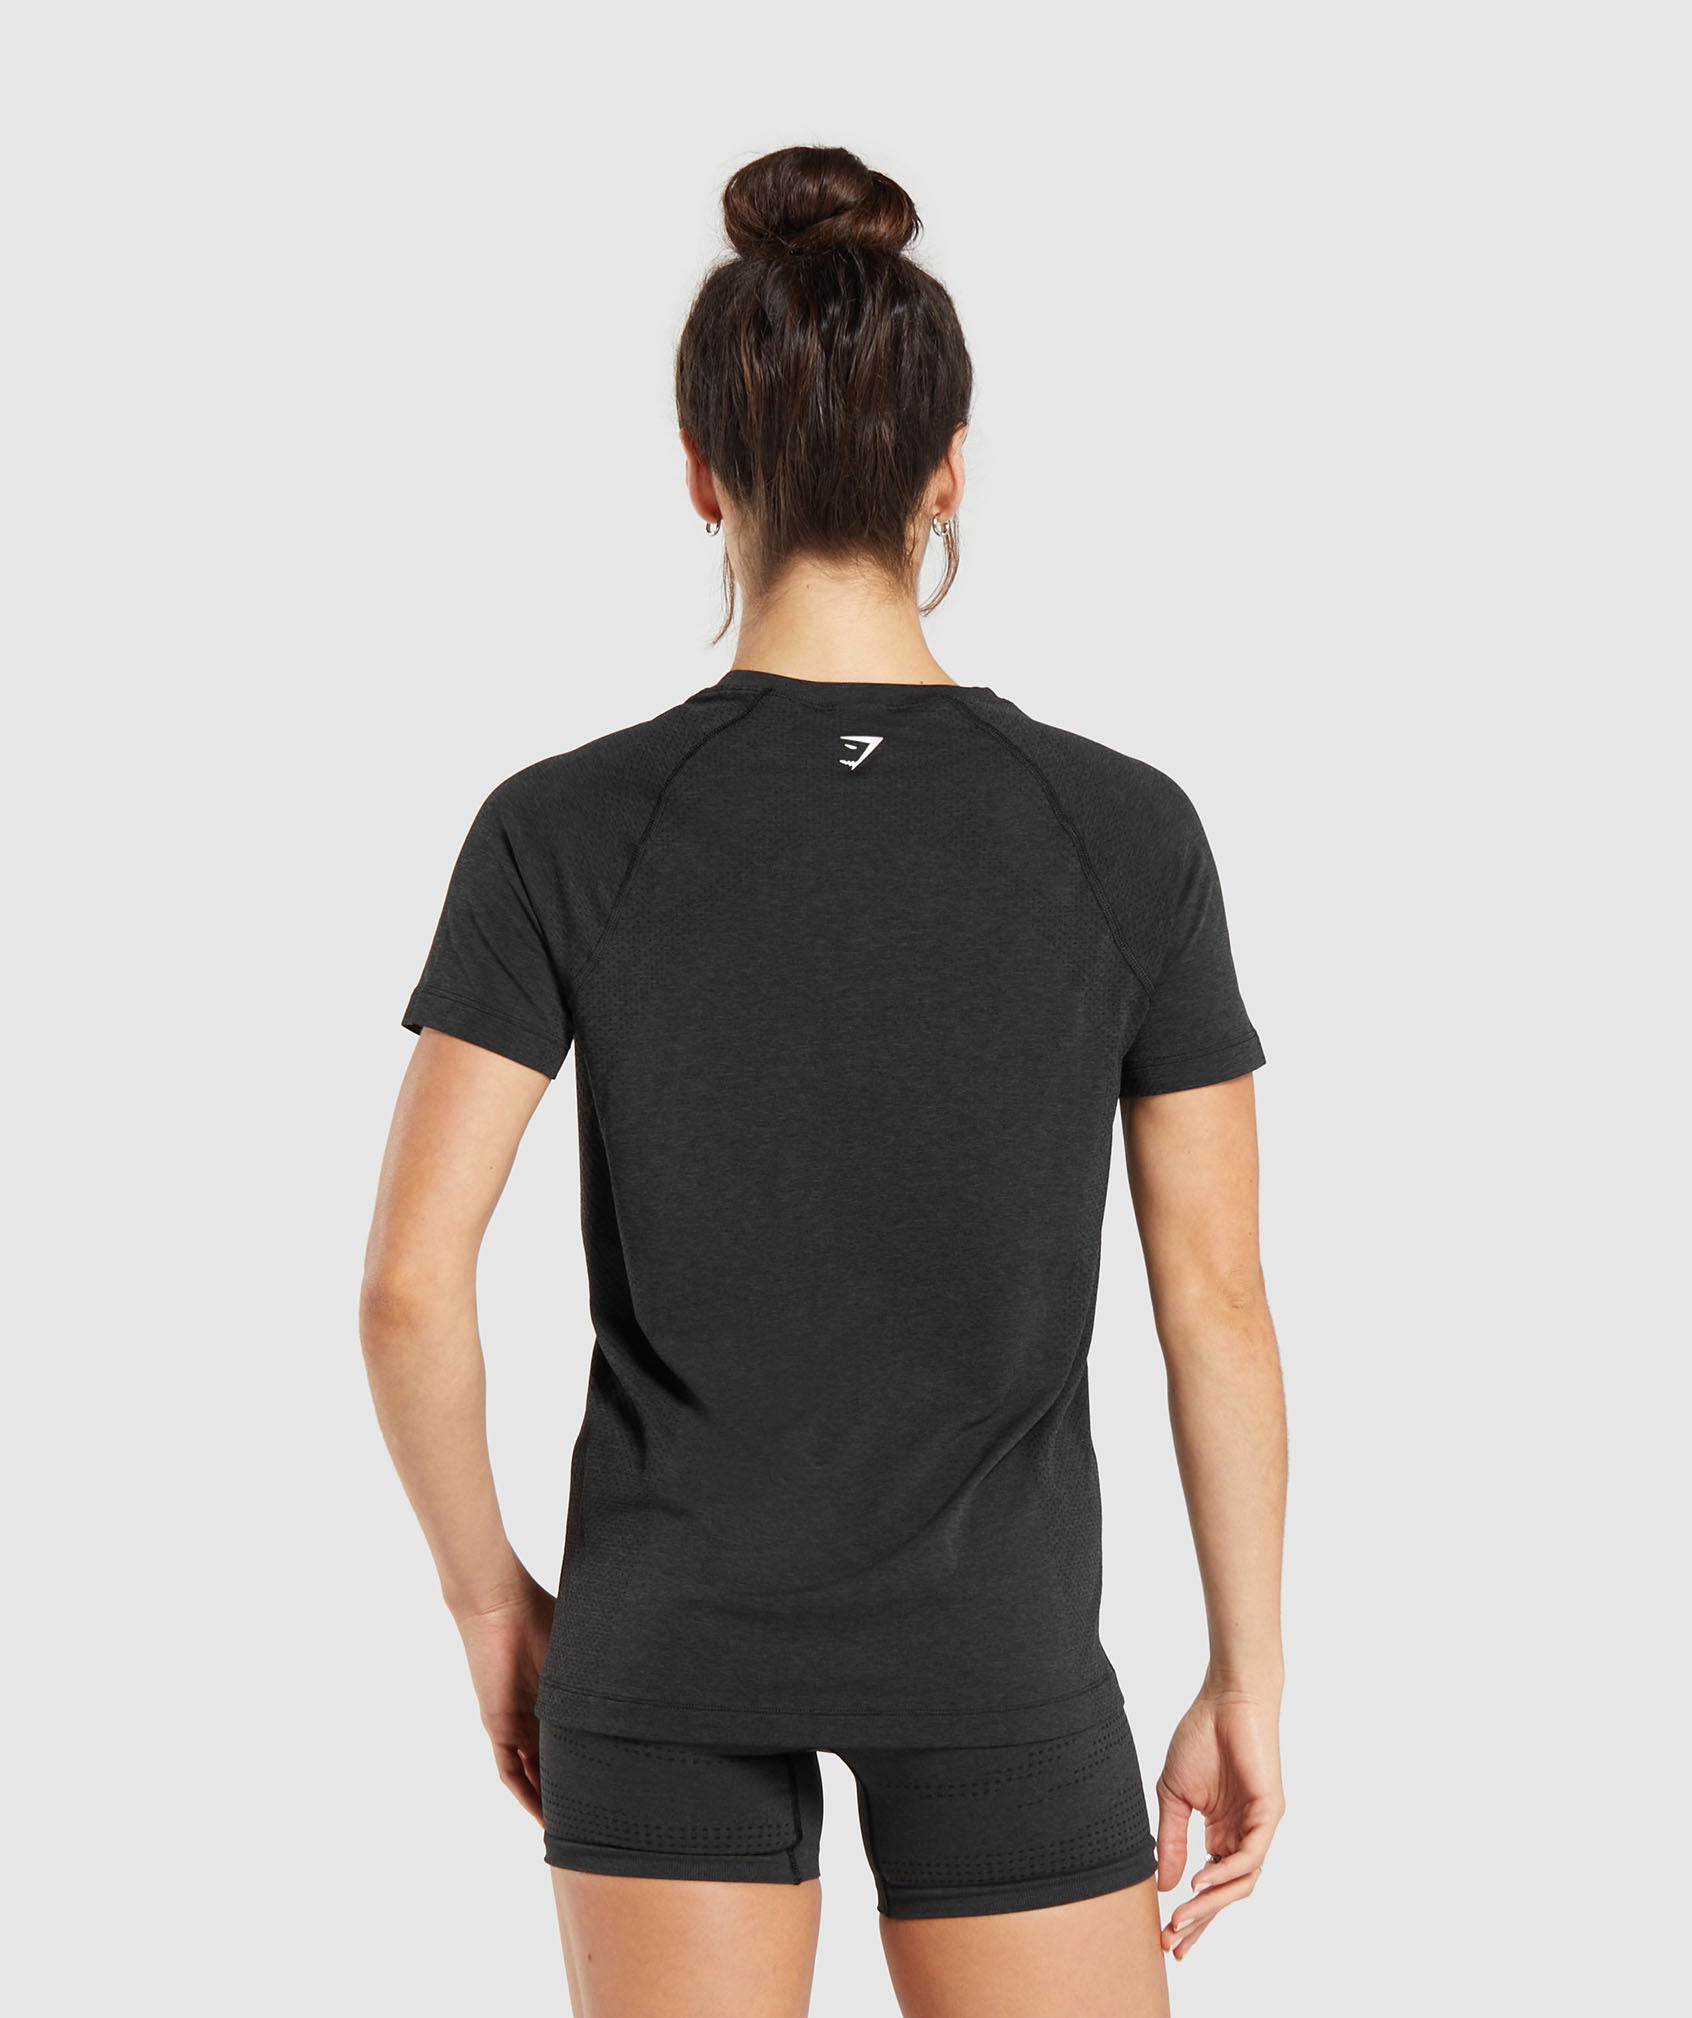 Vital Seamless 2.0 Light T-Shirt in Black Marl - view 2